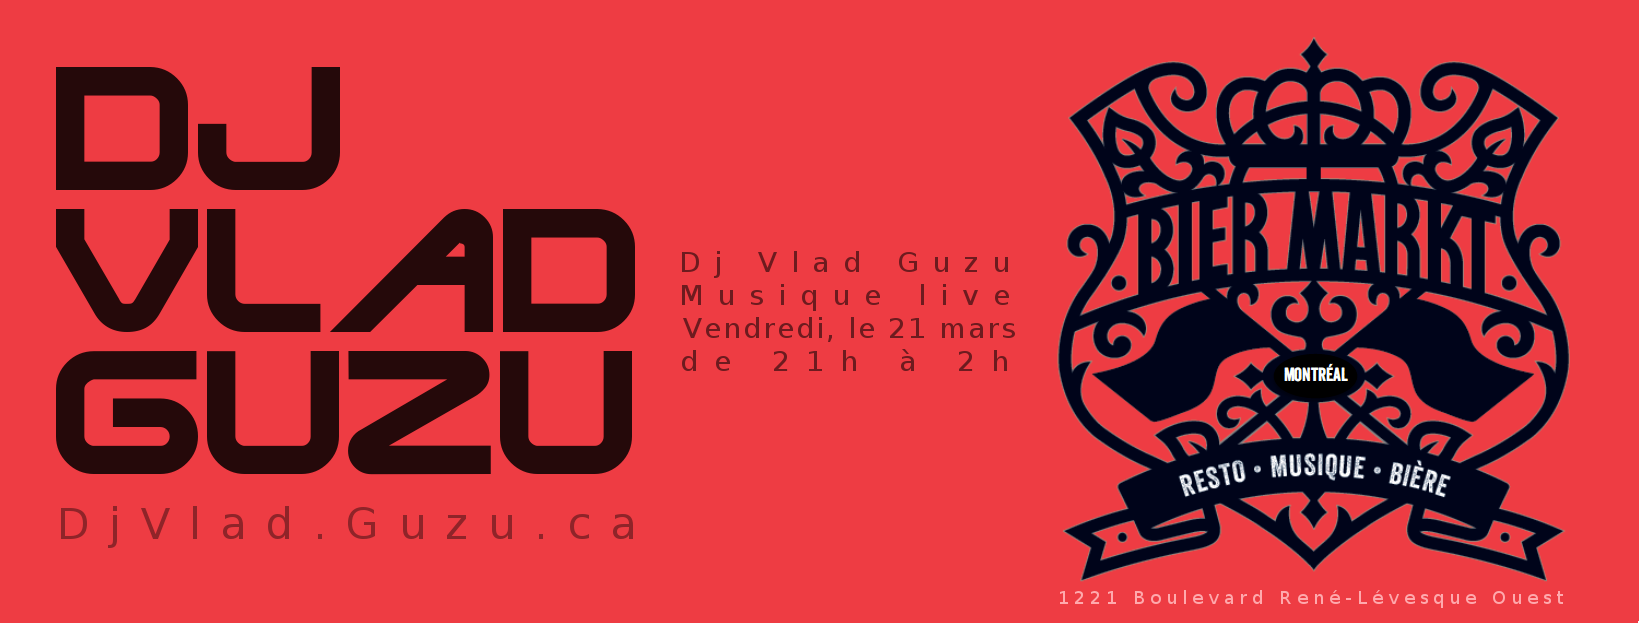 DJ Vlad Guzu et At Last @ Bier Markt, Montreal | MAR 21